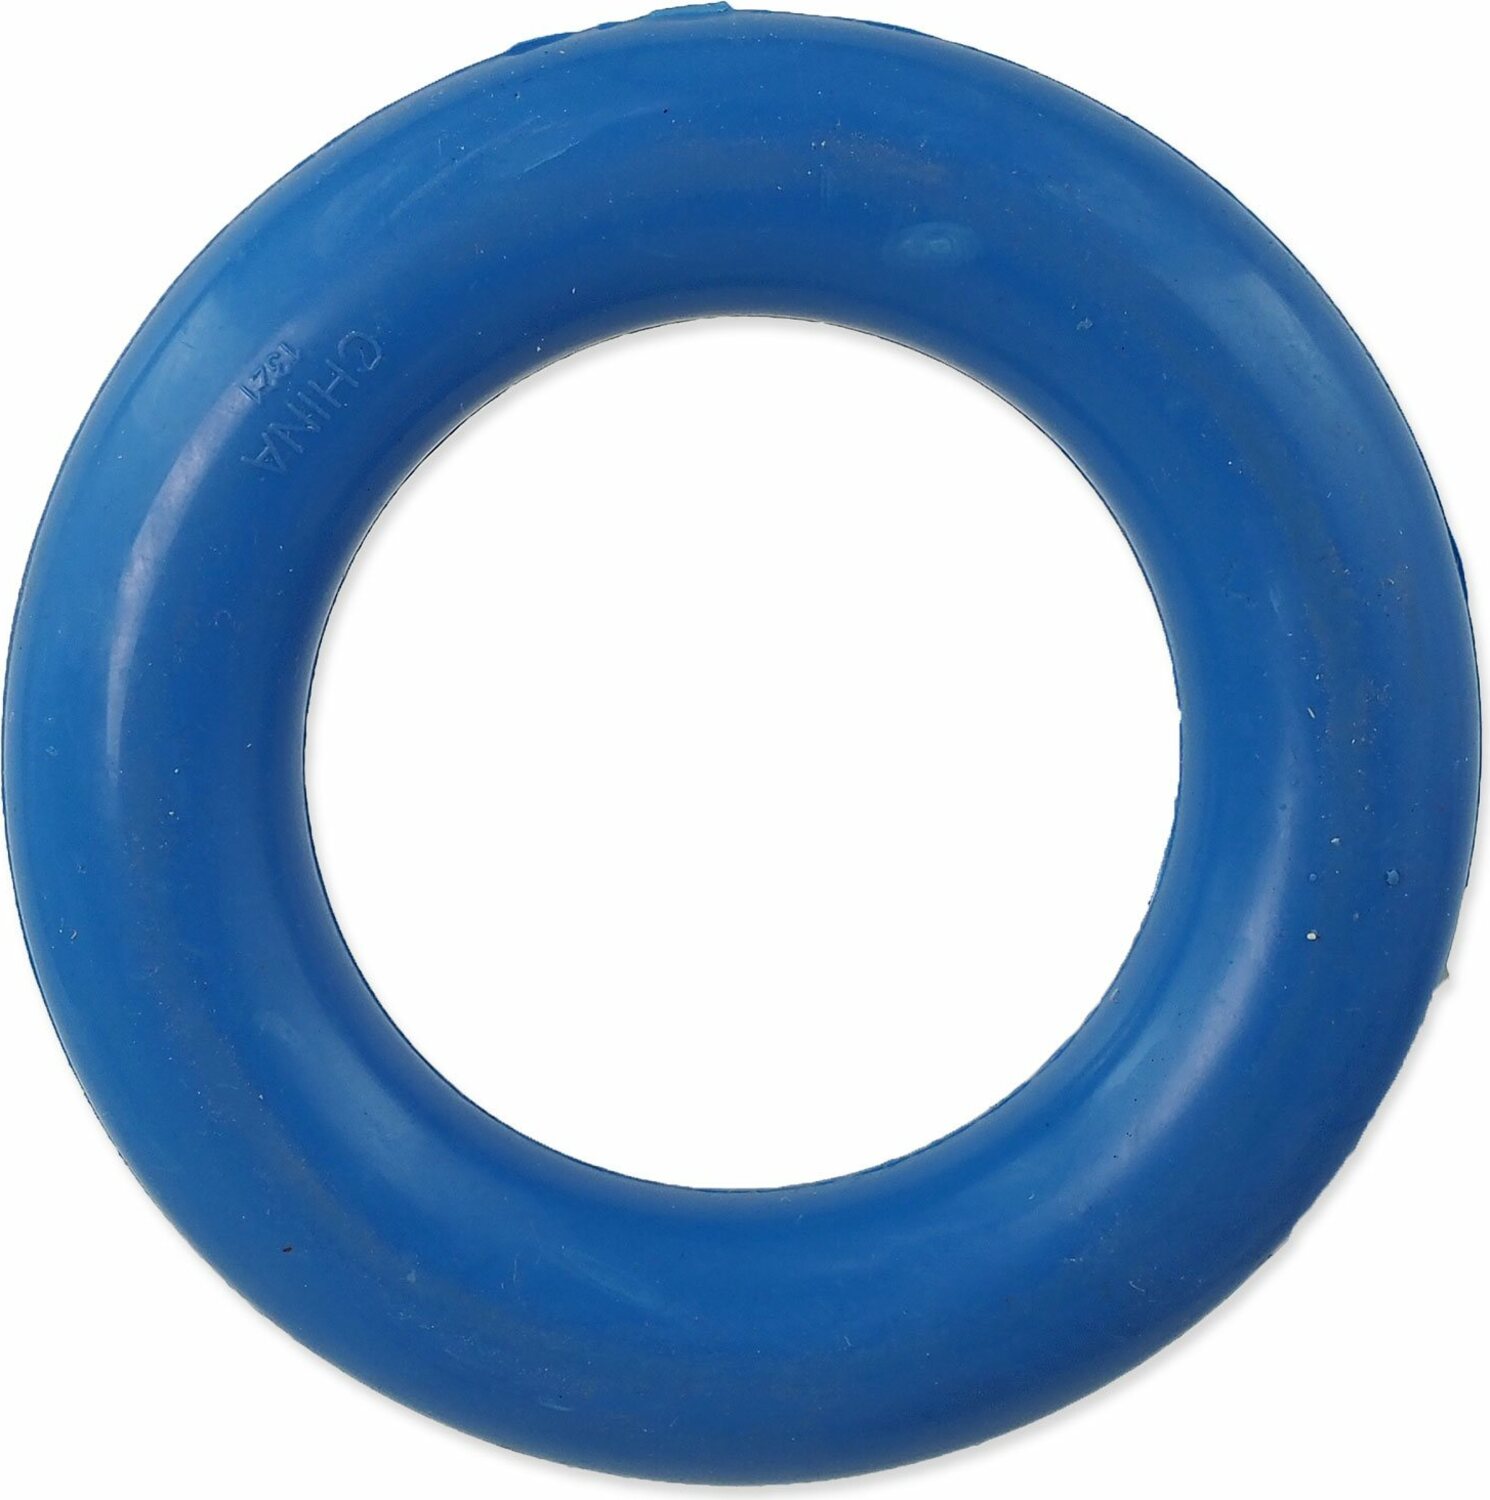 Hračka Dog Fantasy kruh modrý 9cm